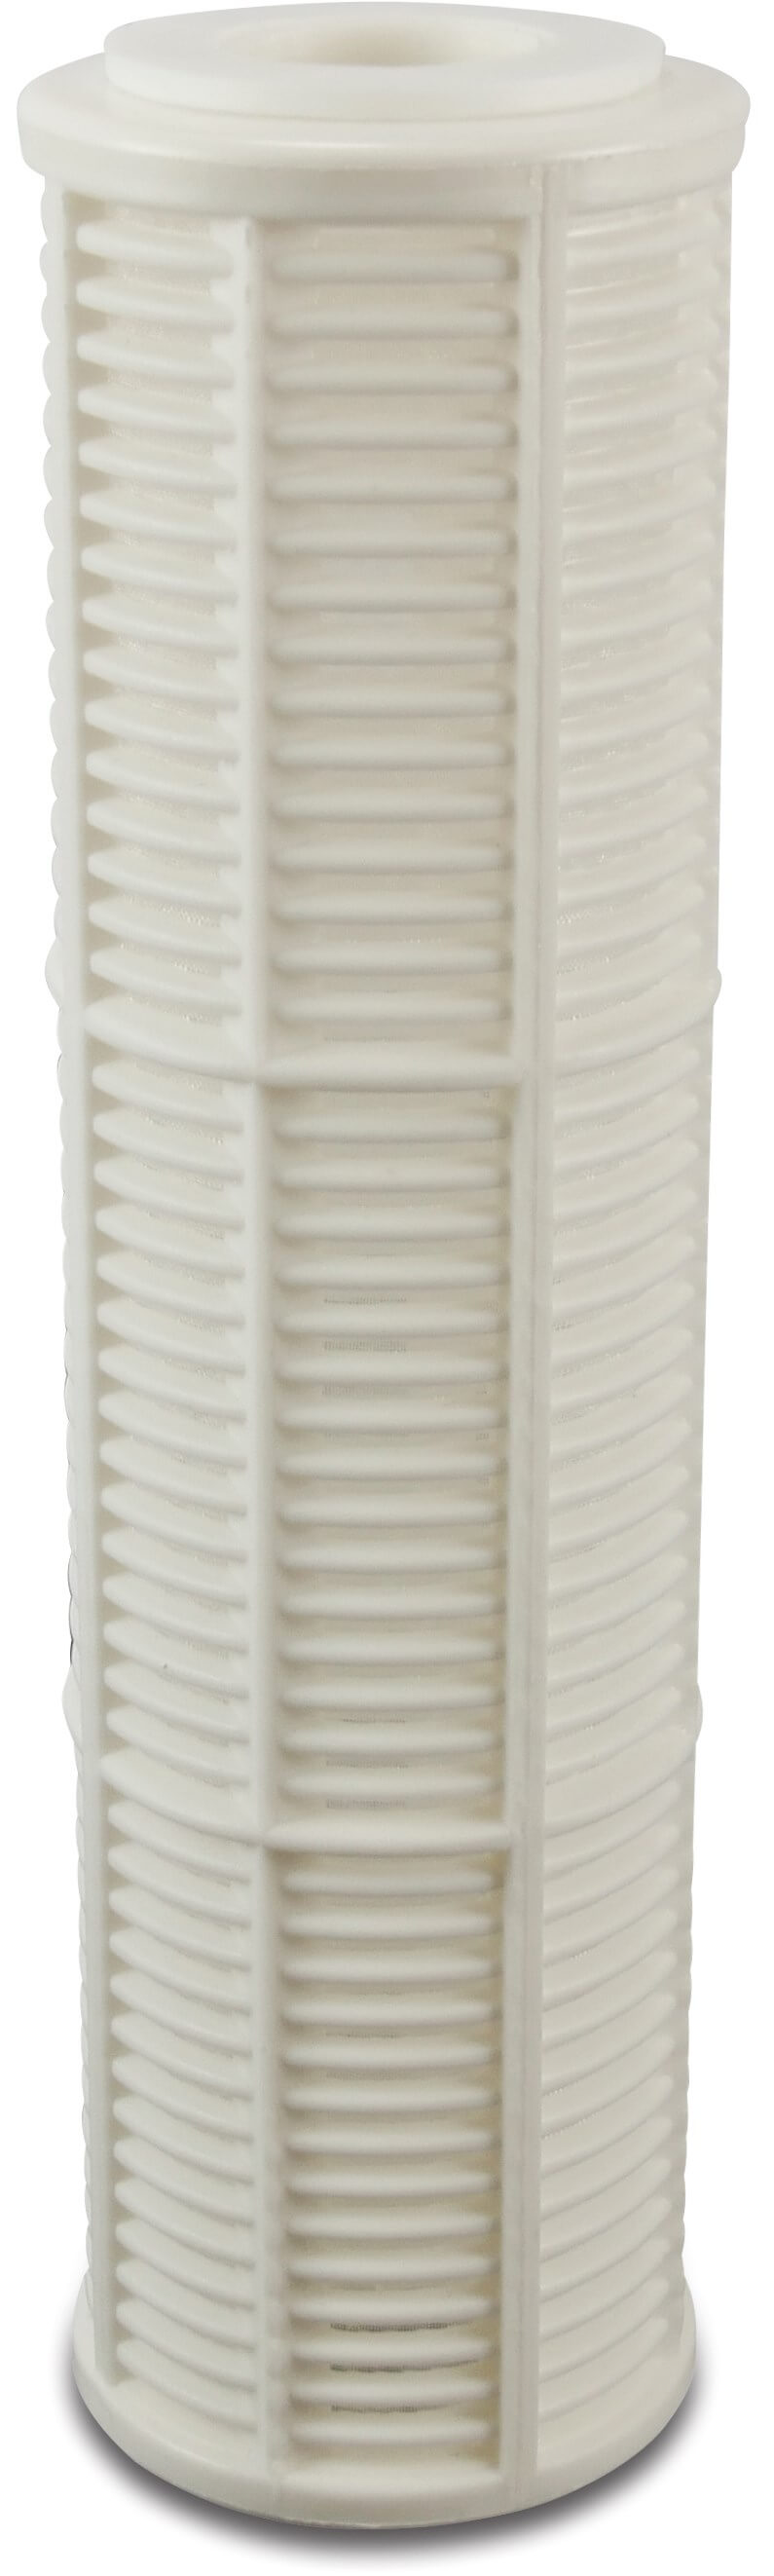 Filter cartridge nylon 60micron polyester gauze type 10" filter